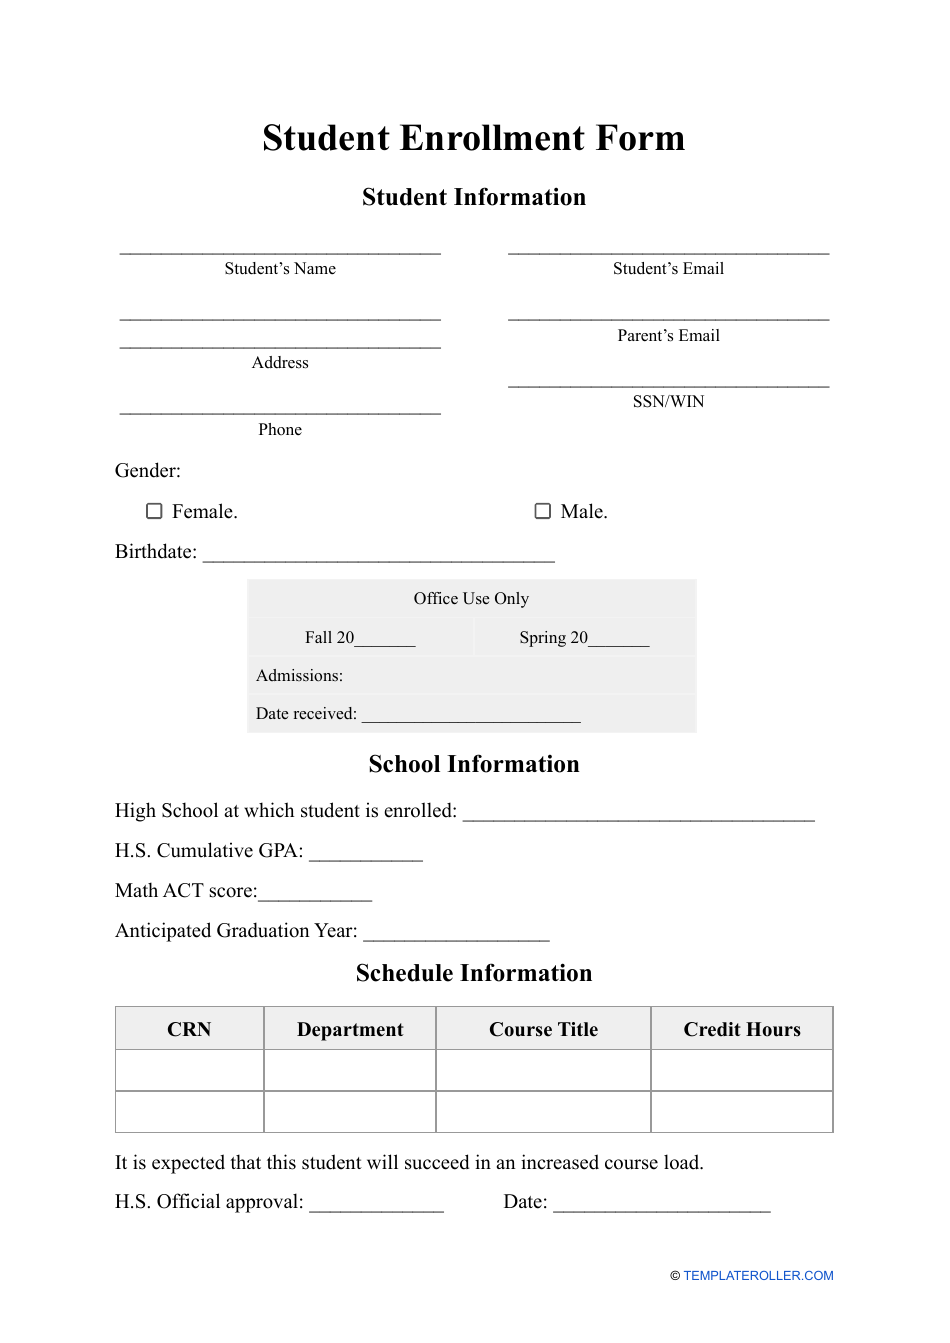 Student Enrollment Form, Page 1